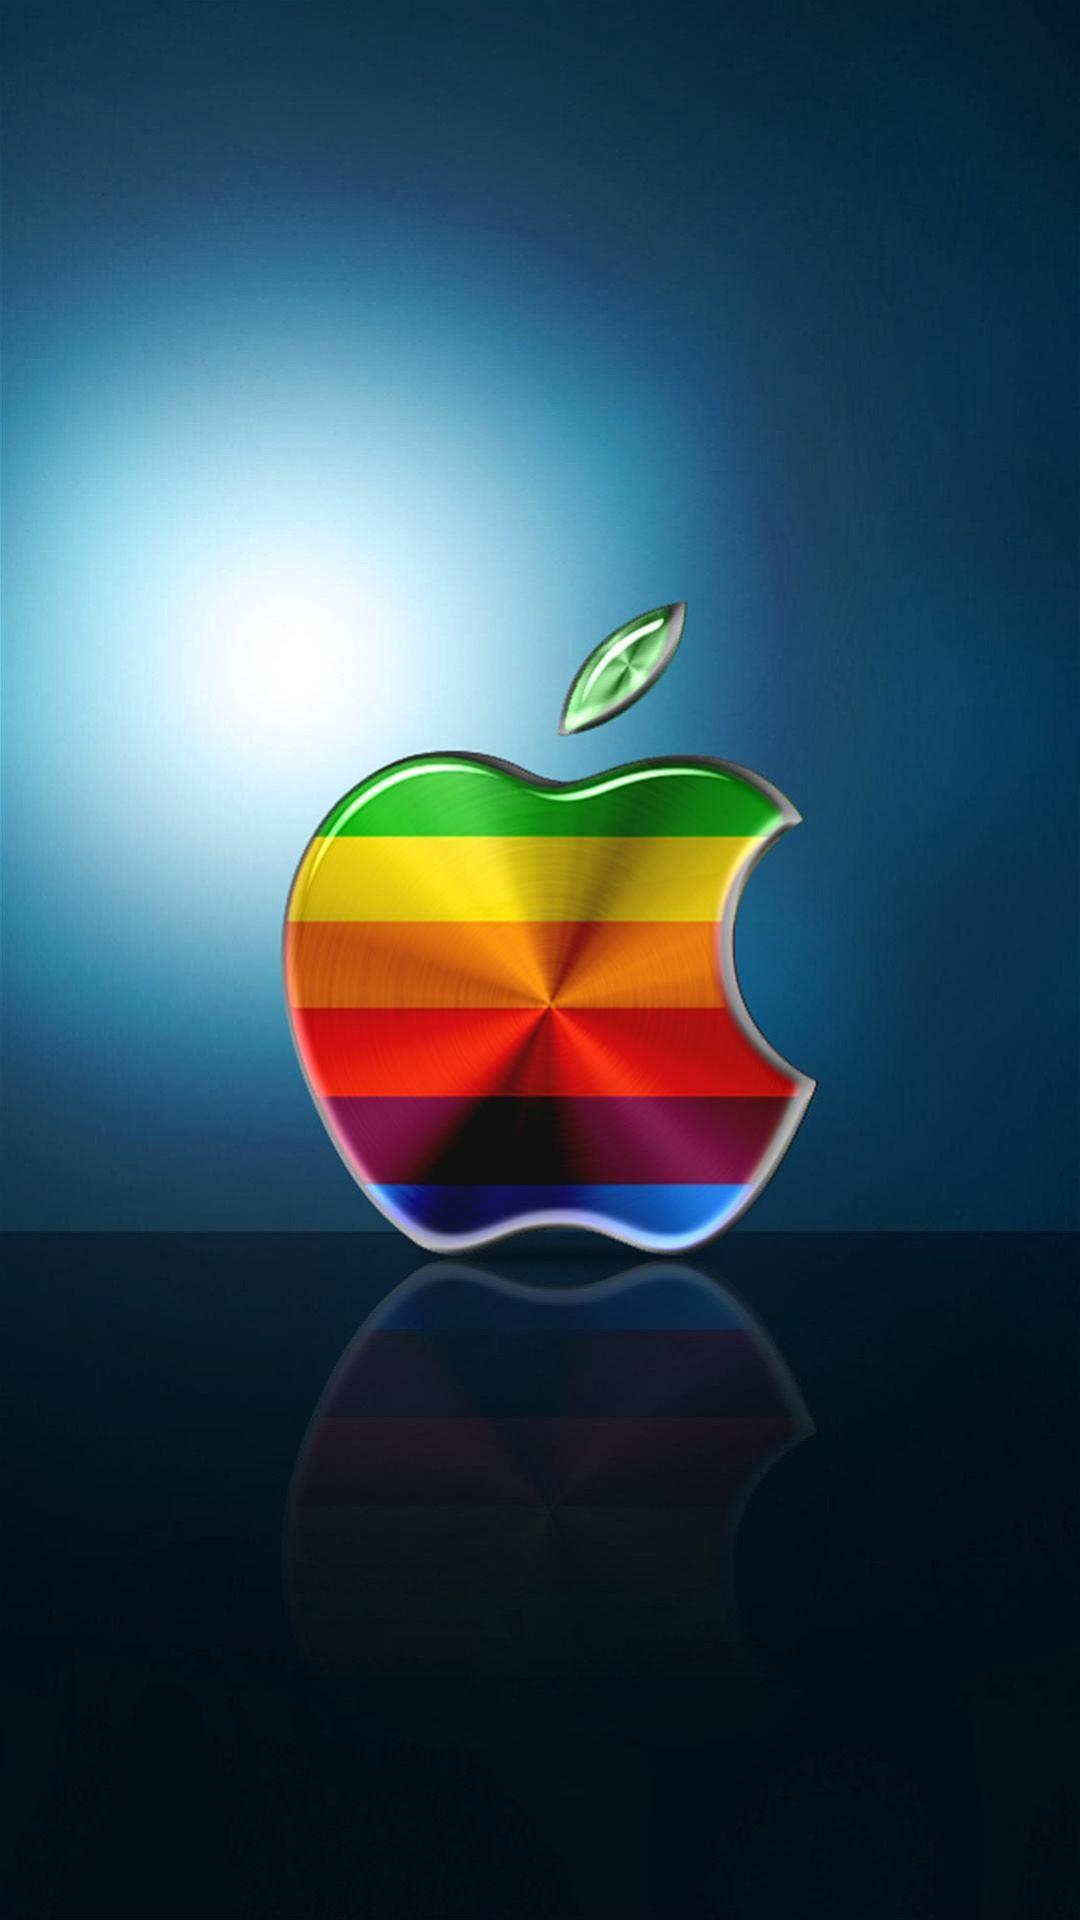 Apple Mobile Wallpaper Photo Download